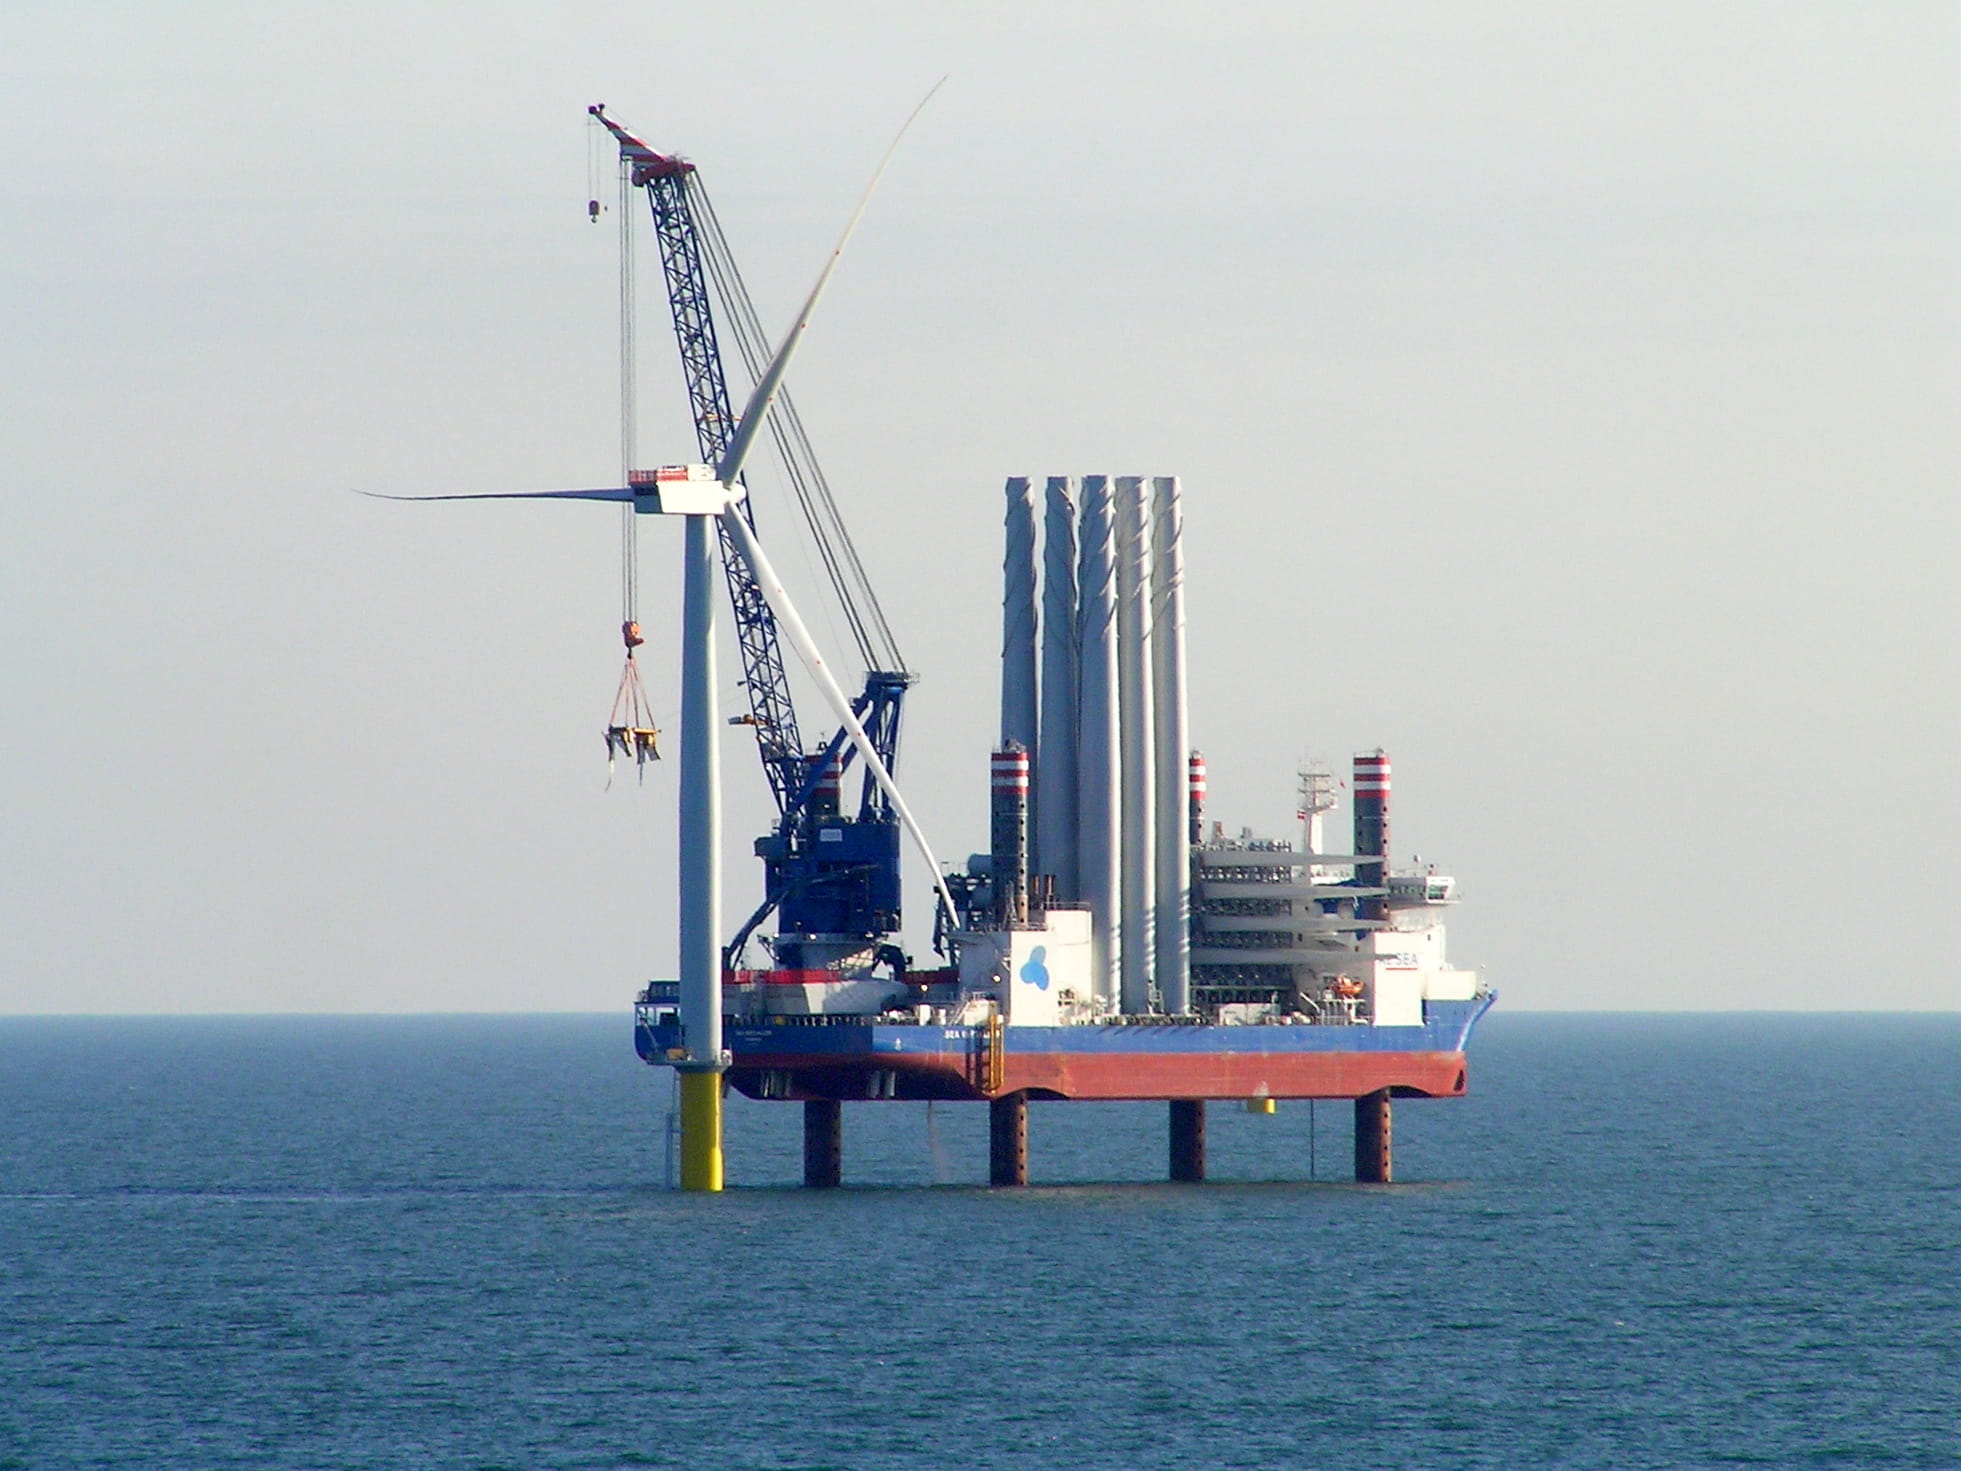 West of Dunddon Sands offshore wind farm